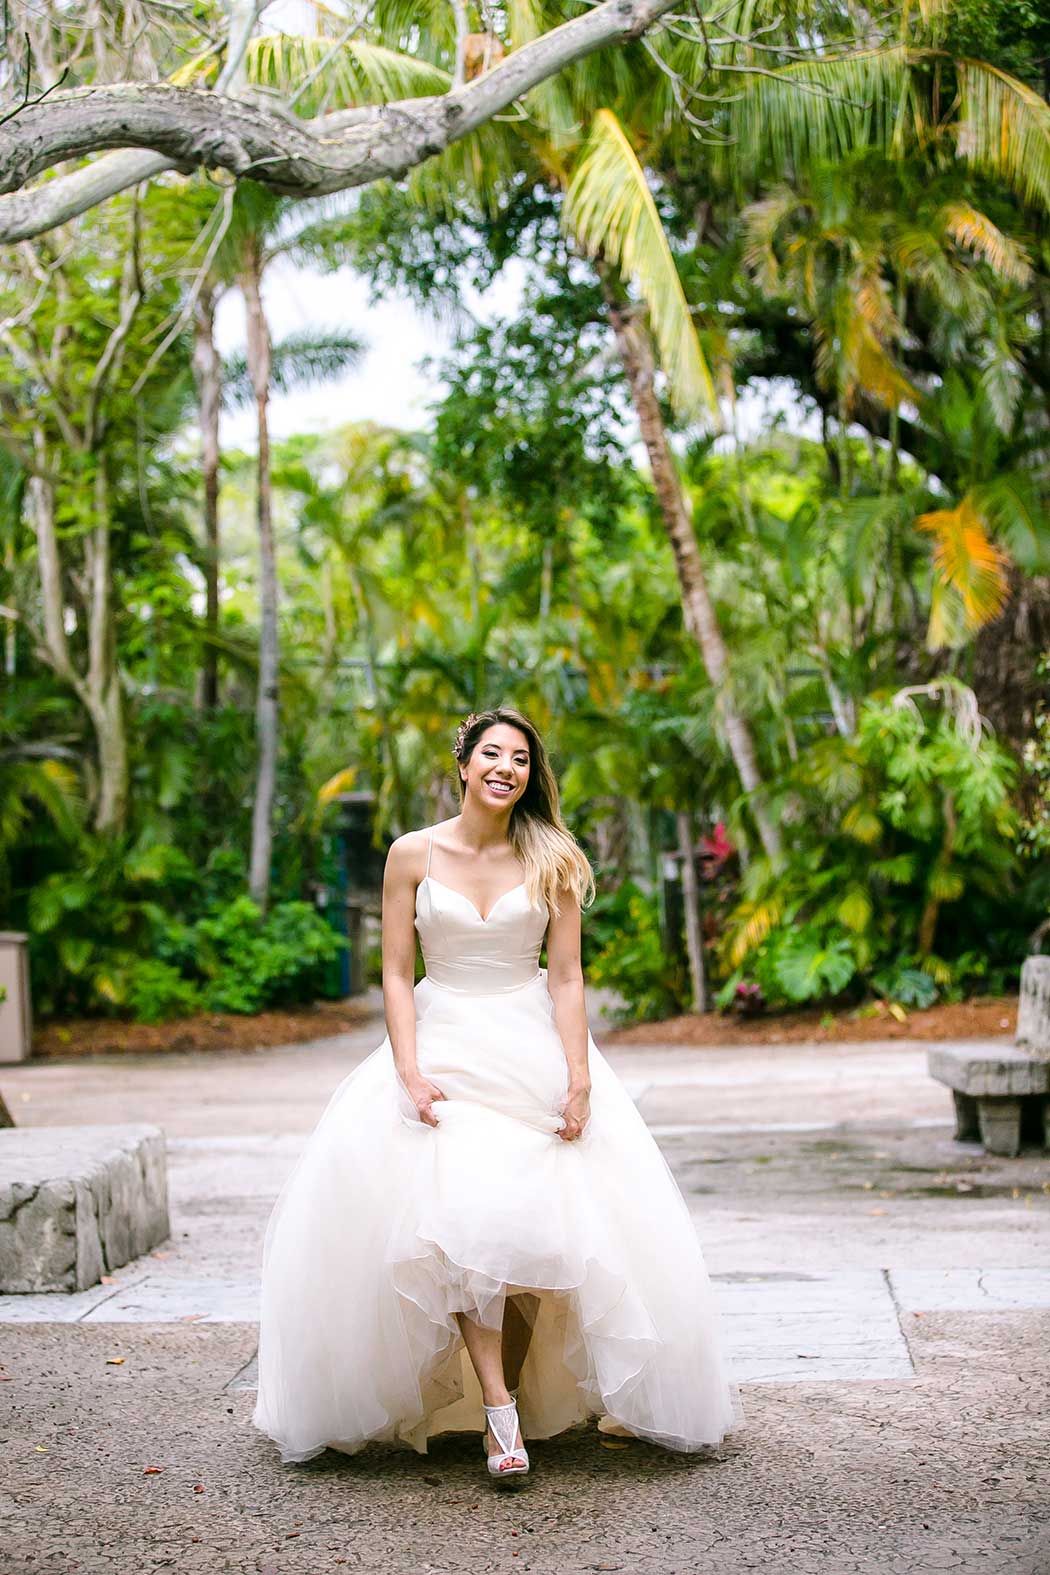 bride runs towards camera during unique bridal photographs at palm beach zoo wedding